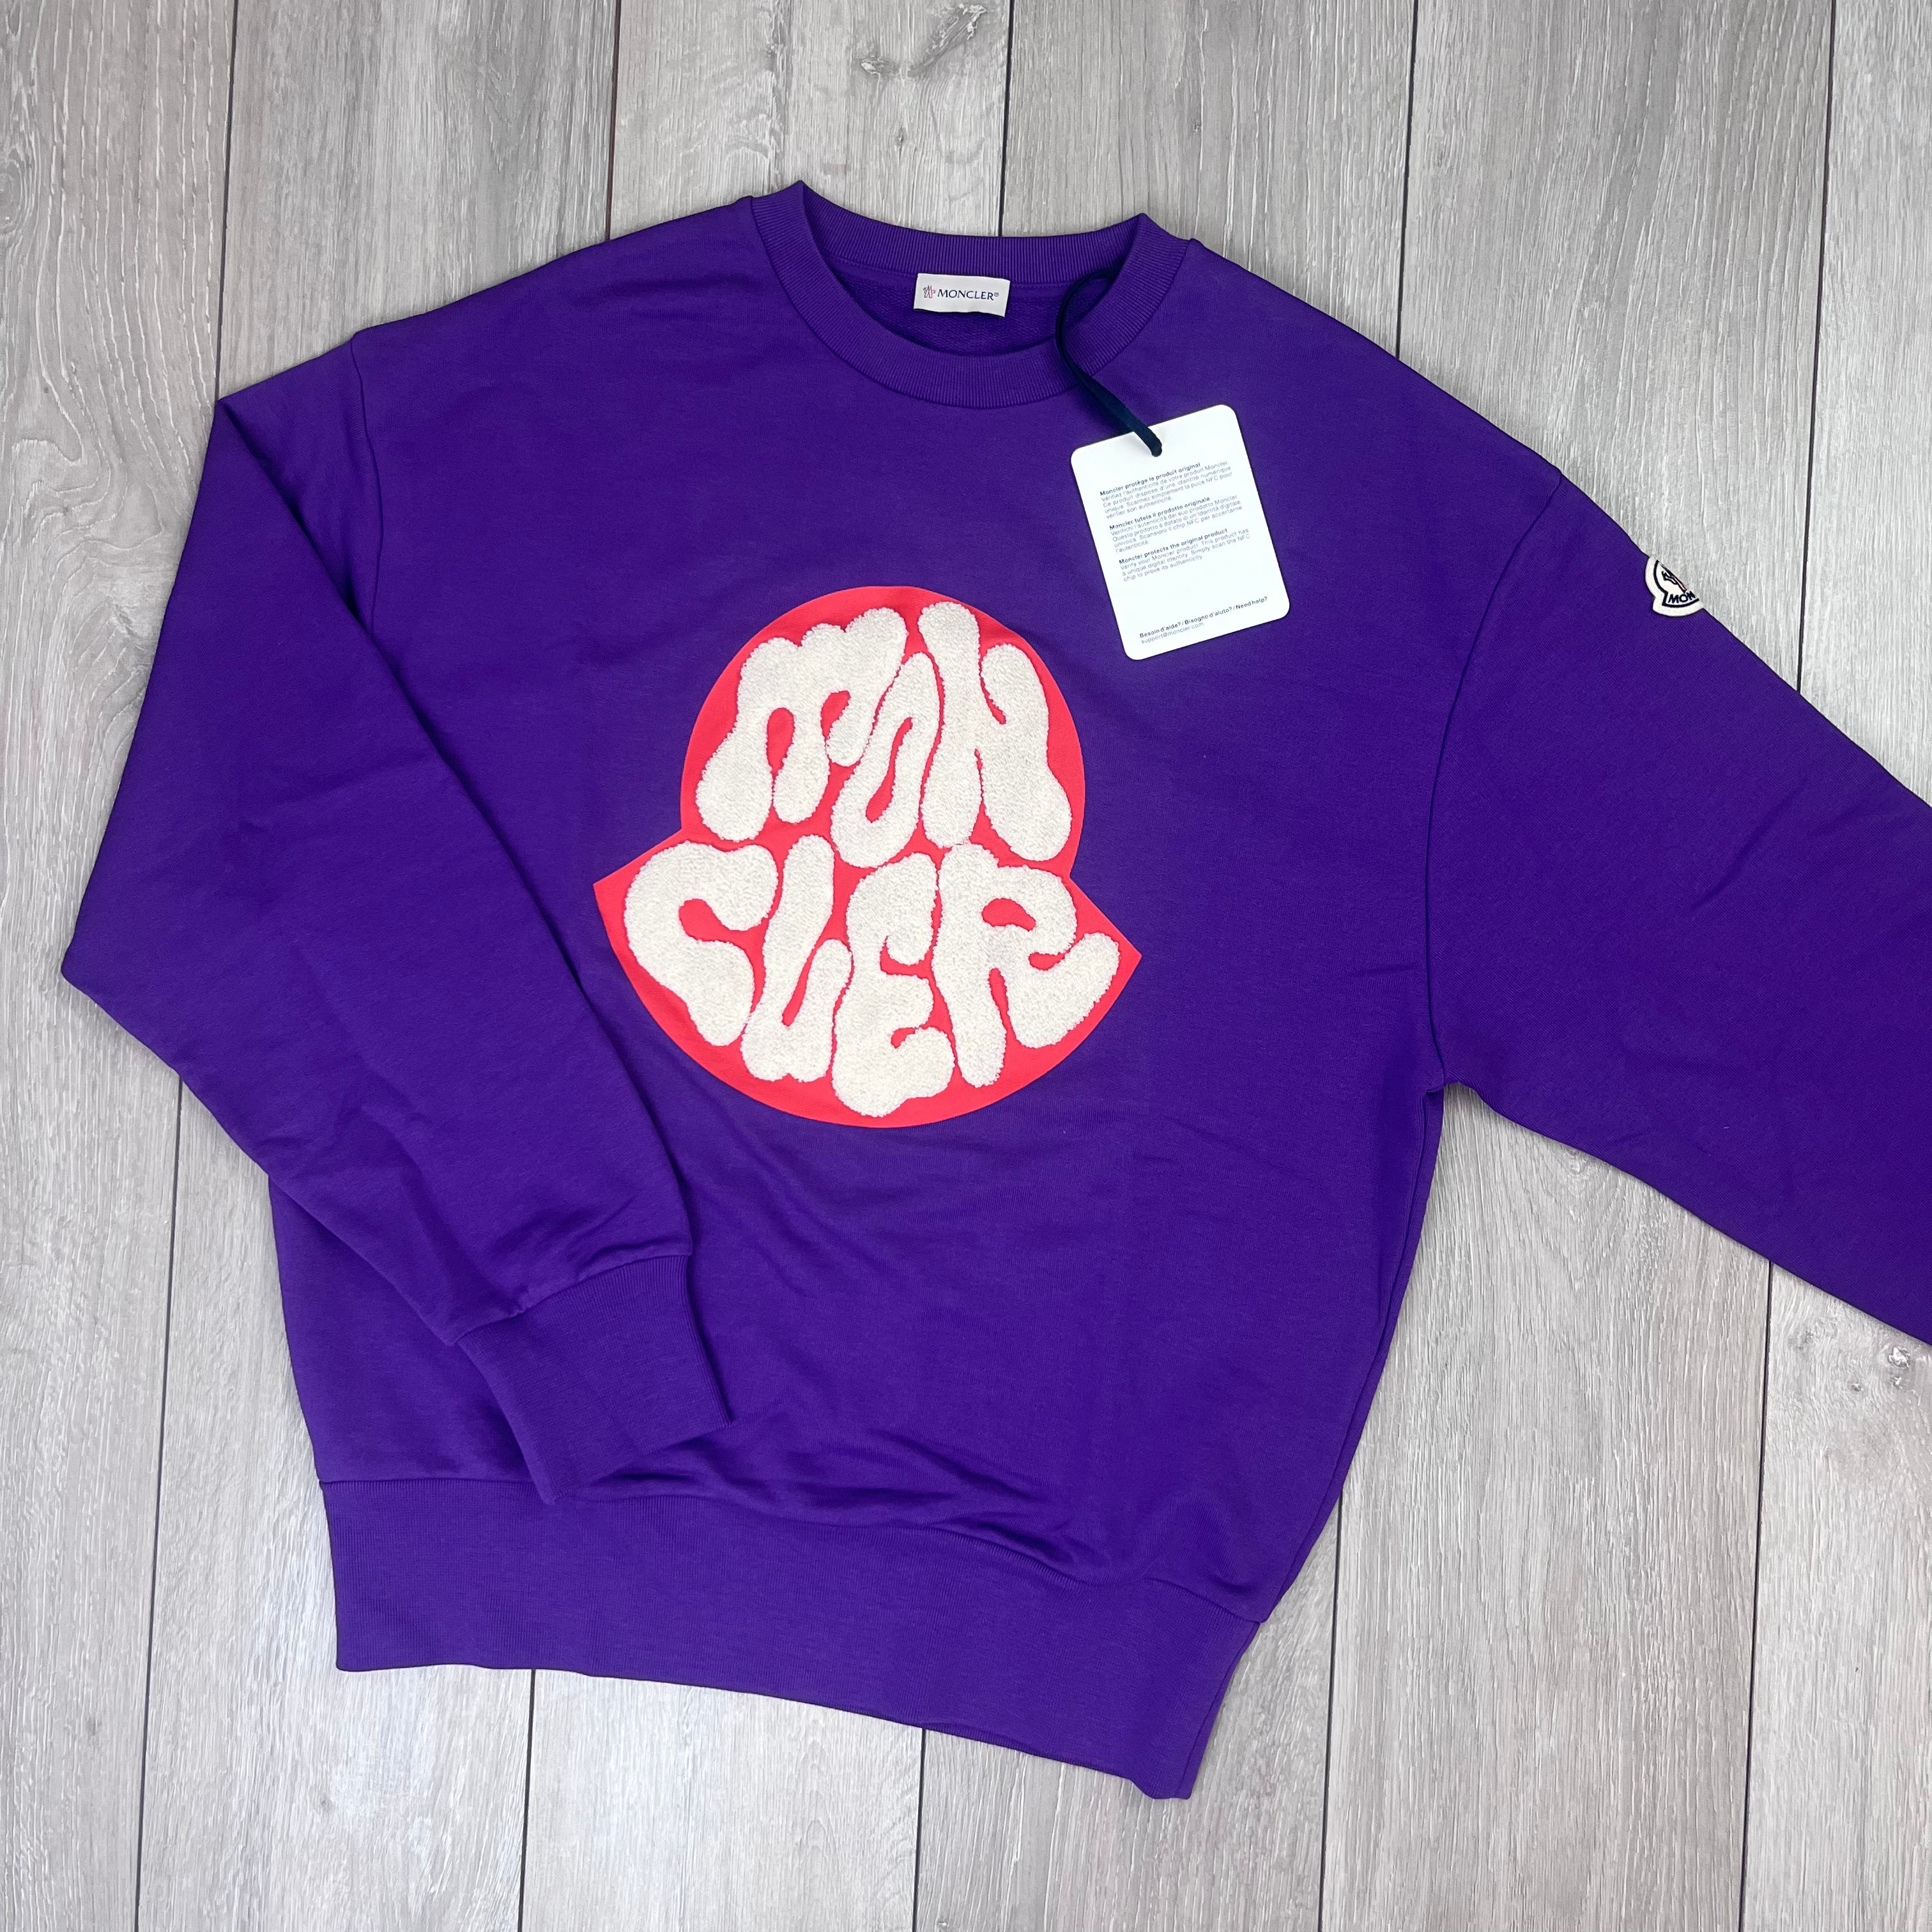 Moncler Graphic Sweatshirt